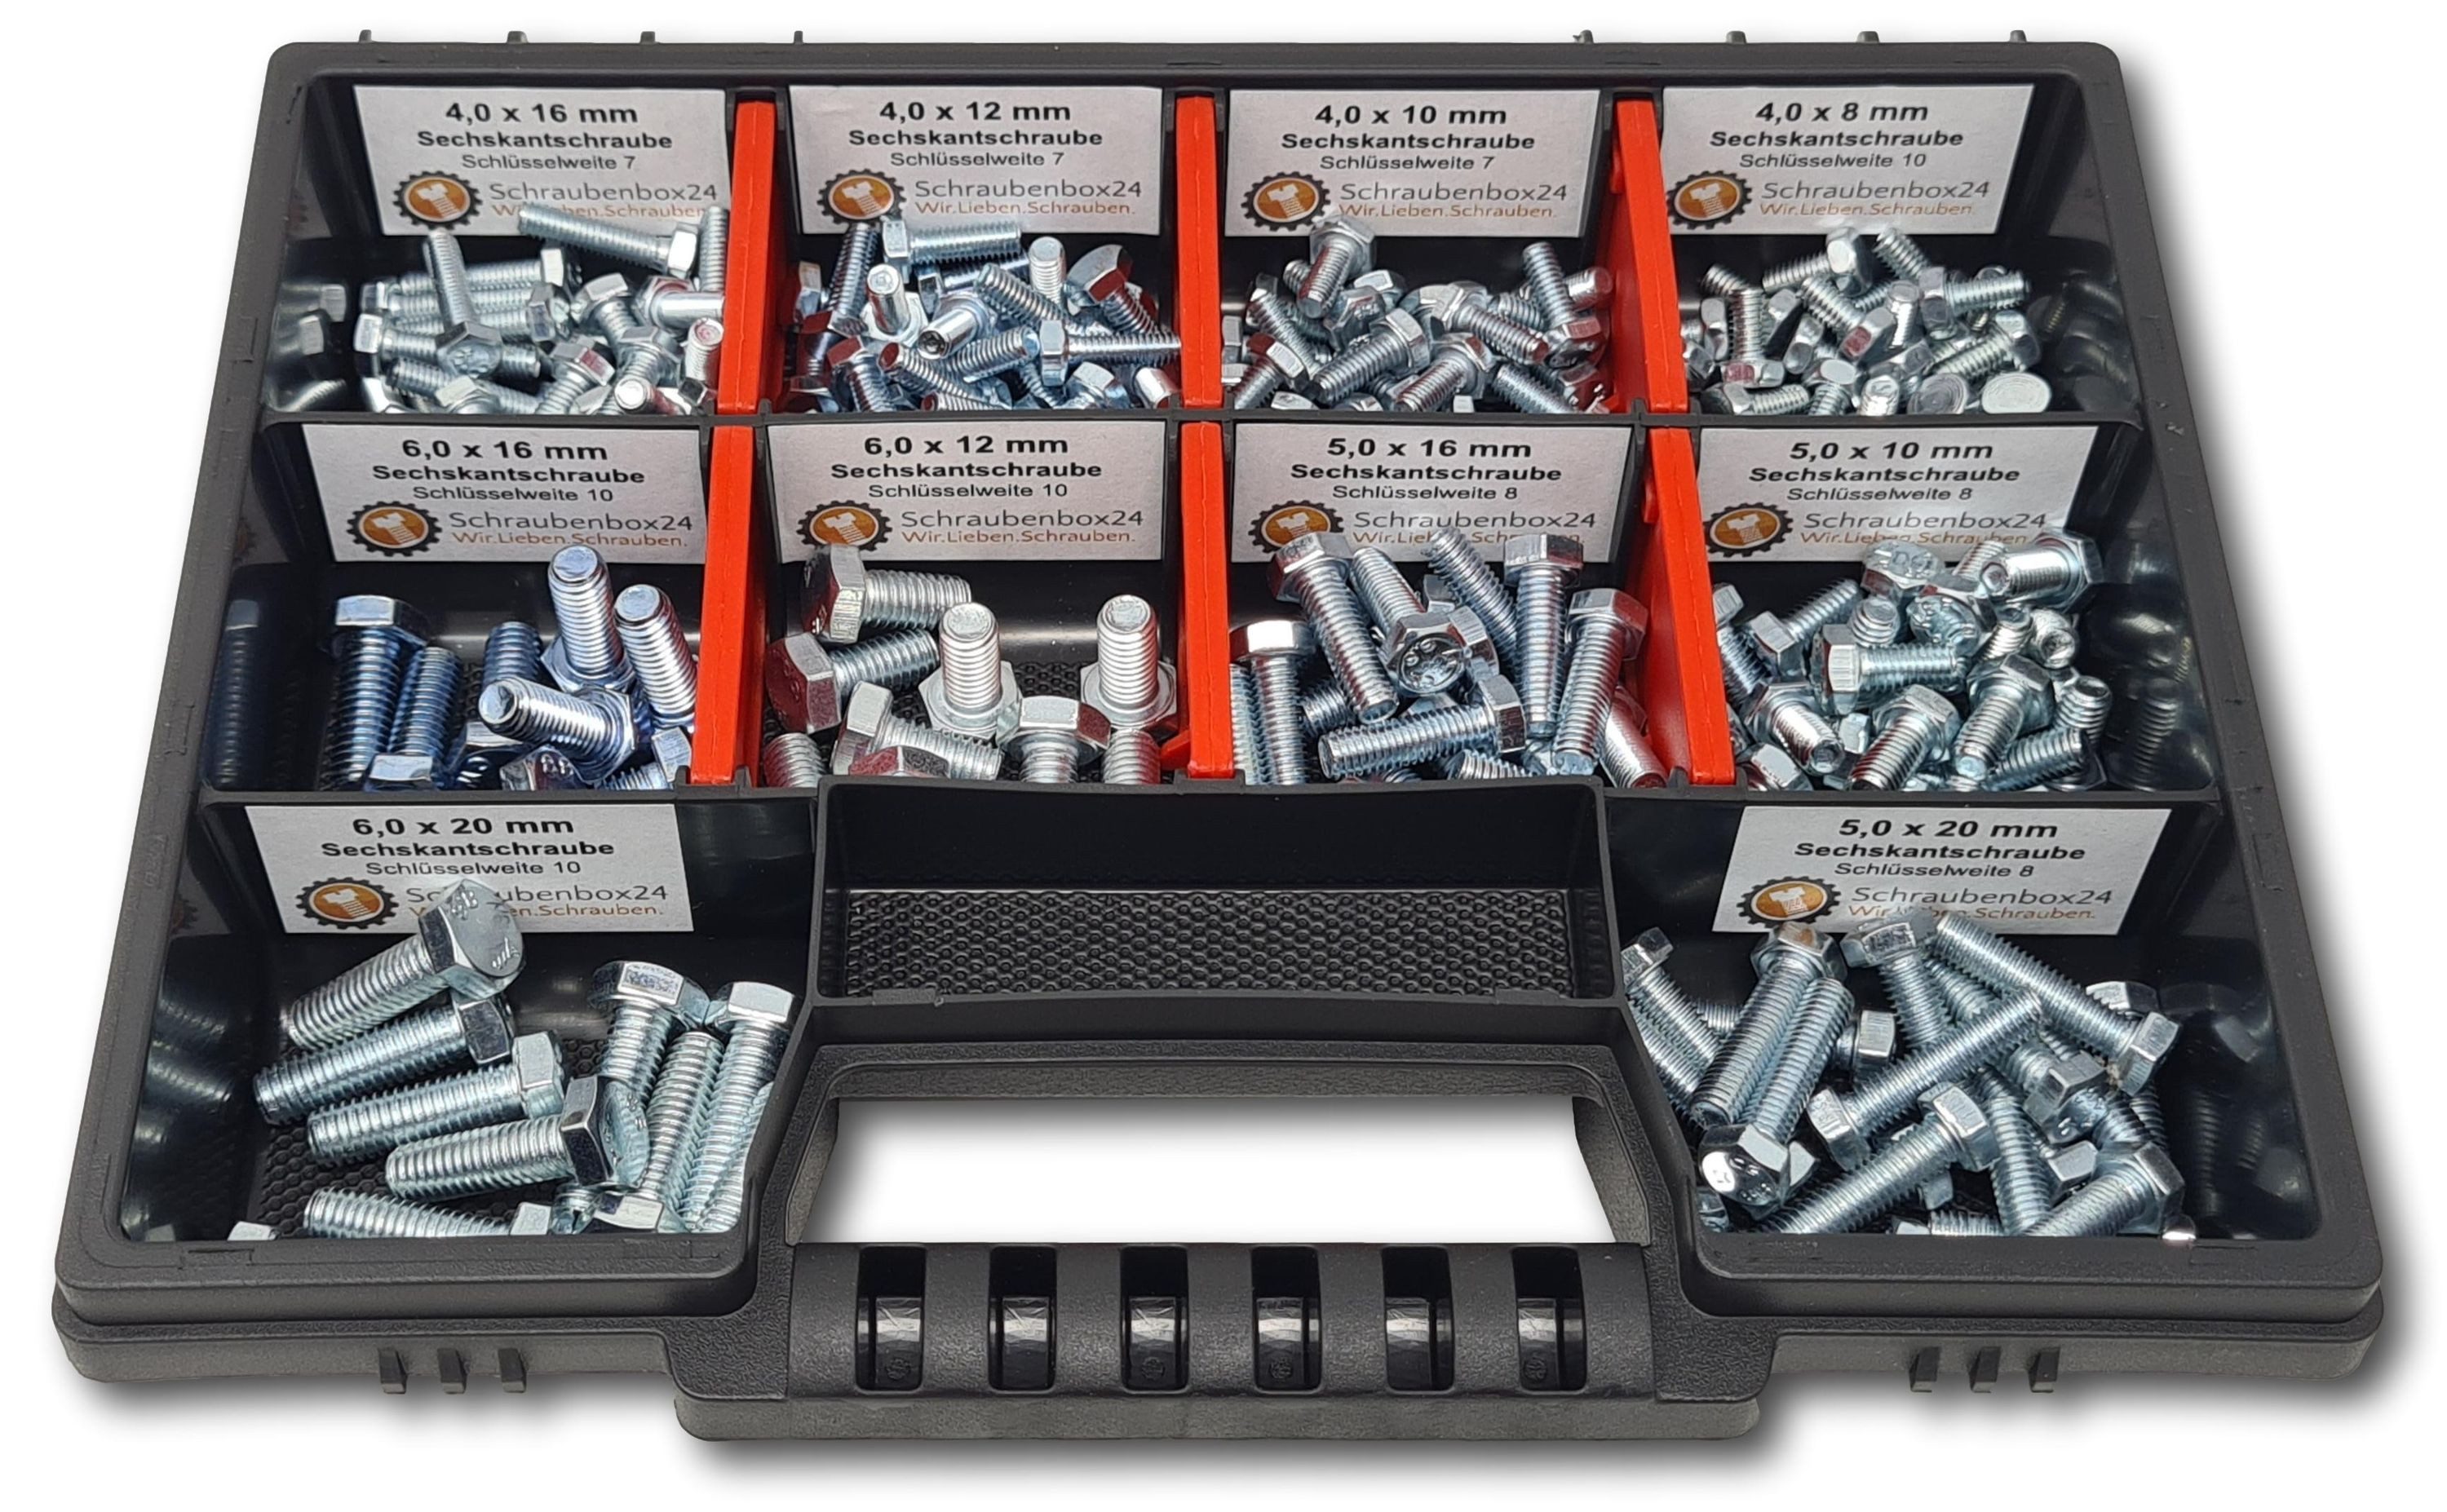 Schraubenbox24 Sechskantschraube Sortiment M4-M5-M6 // 8mm-20mm, (DIN 933 ISO 4017, 215 St., galvanisch verzinkt), 215 Stück Sechskantschrauben